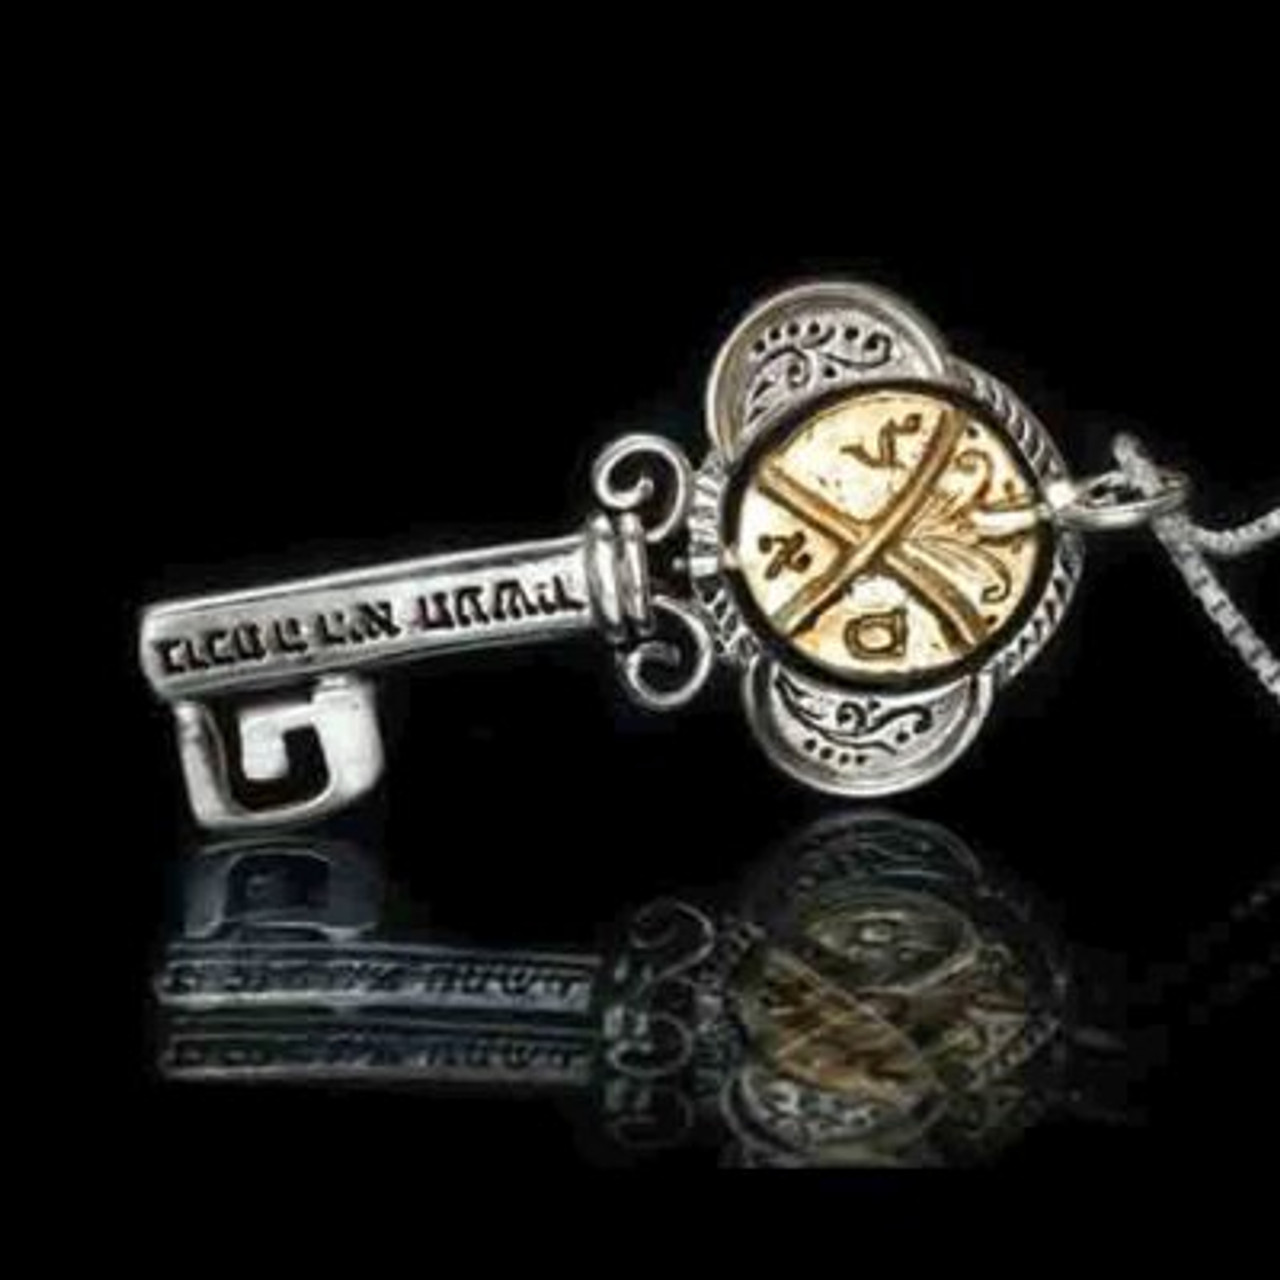 Sterling Silver Kabbalah Key Necklace with Chrysoberyl, Jewish Jewelry